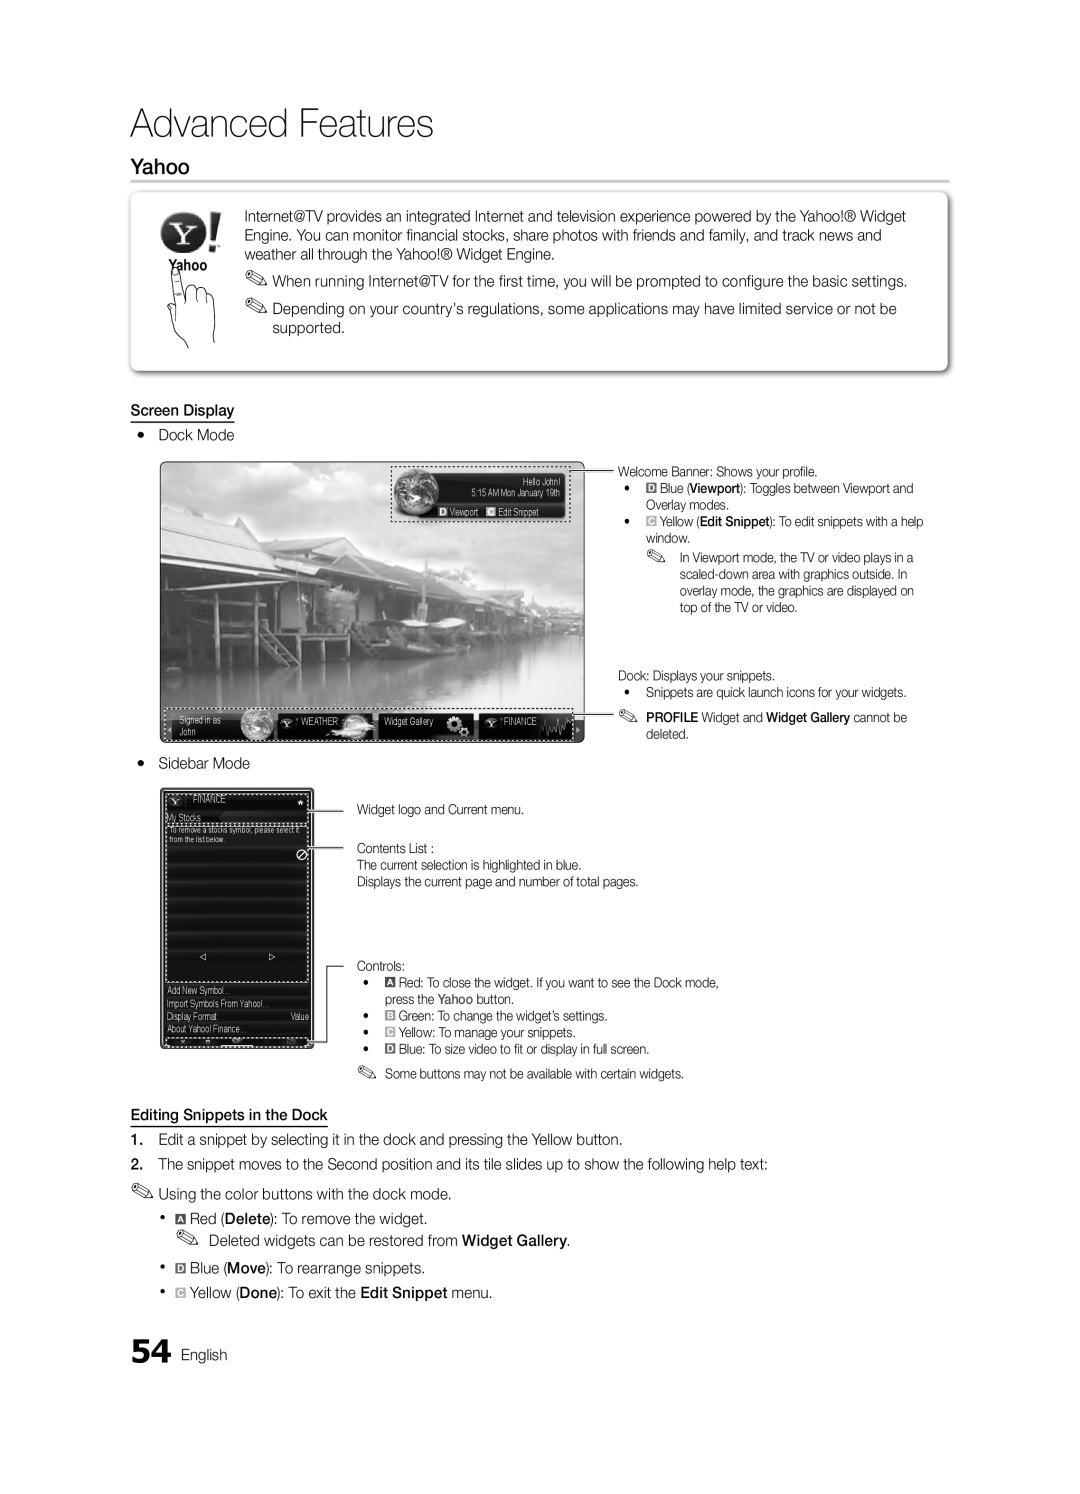 Samsung BN68-03088A-01, Series C9 user manual Yahoo, Advanced Features 